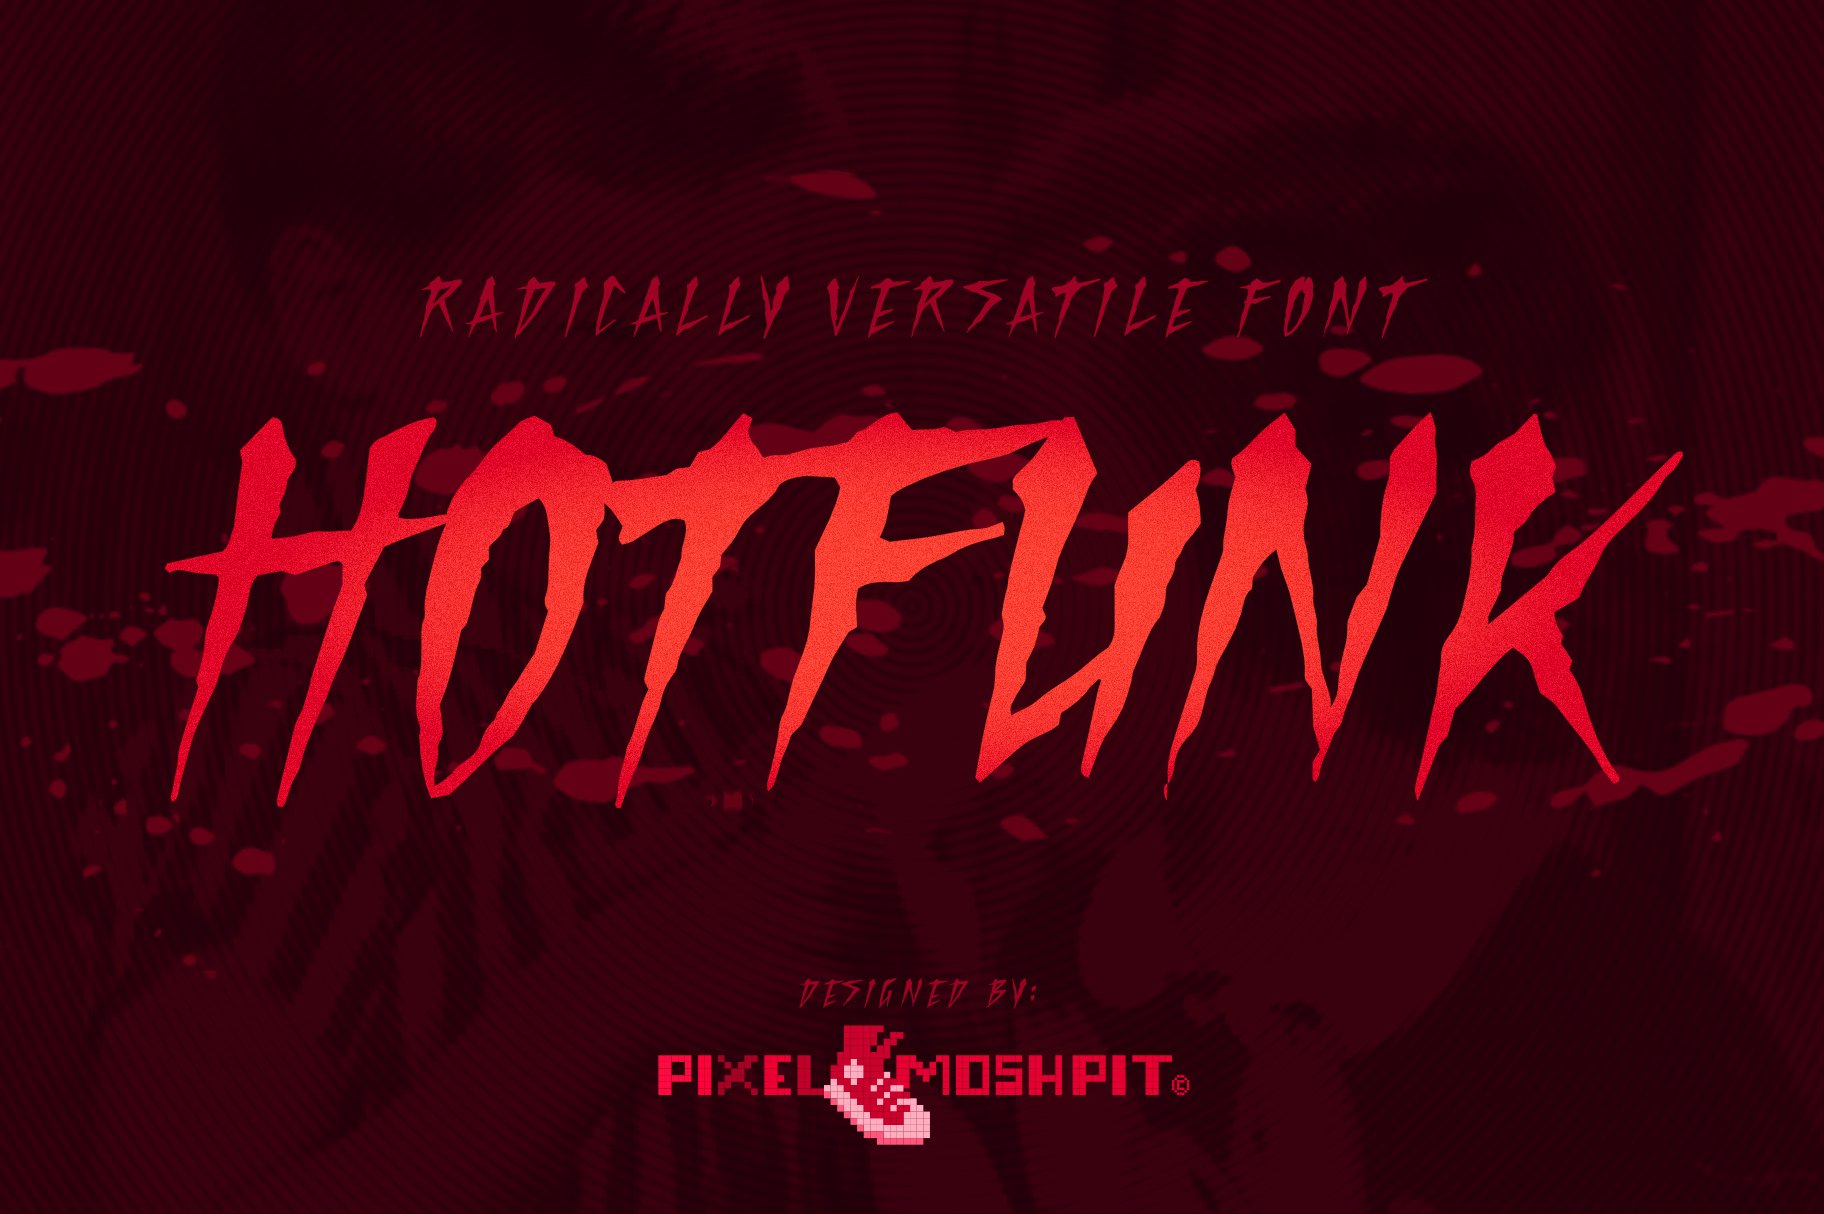 Hotfunk cover image.